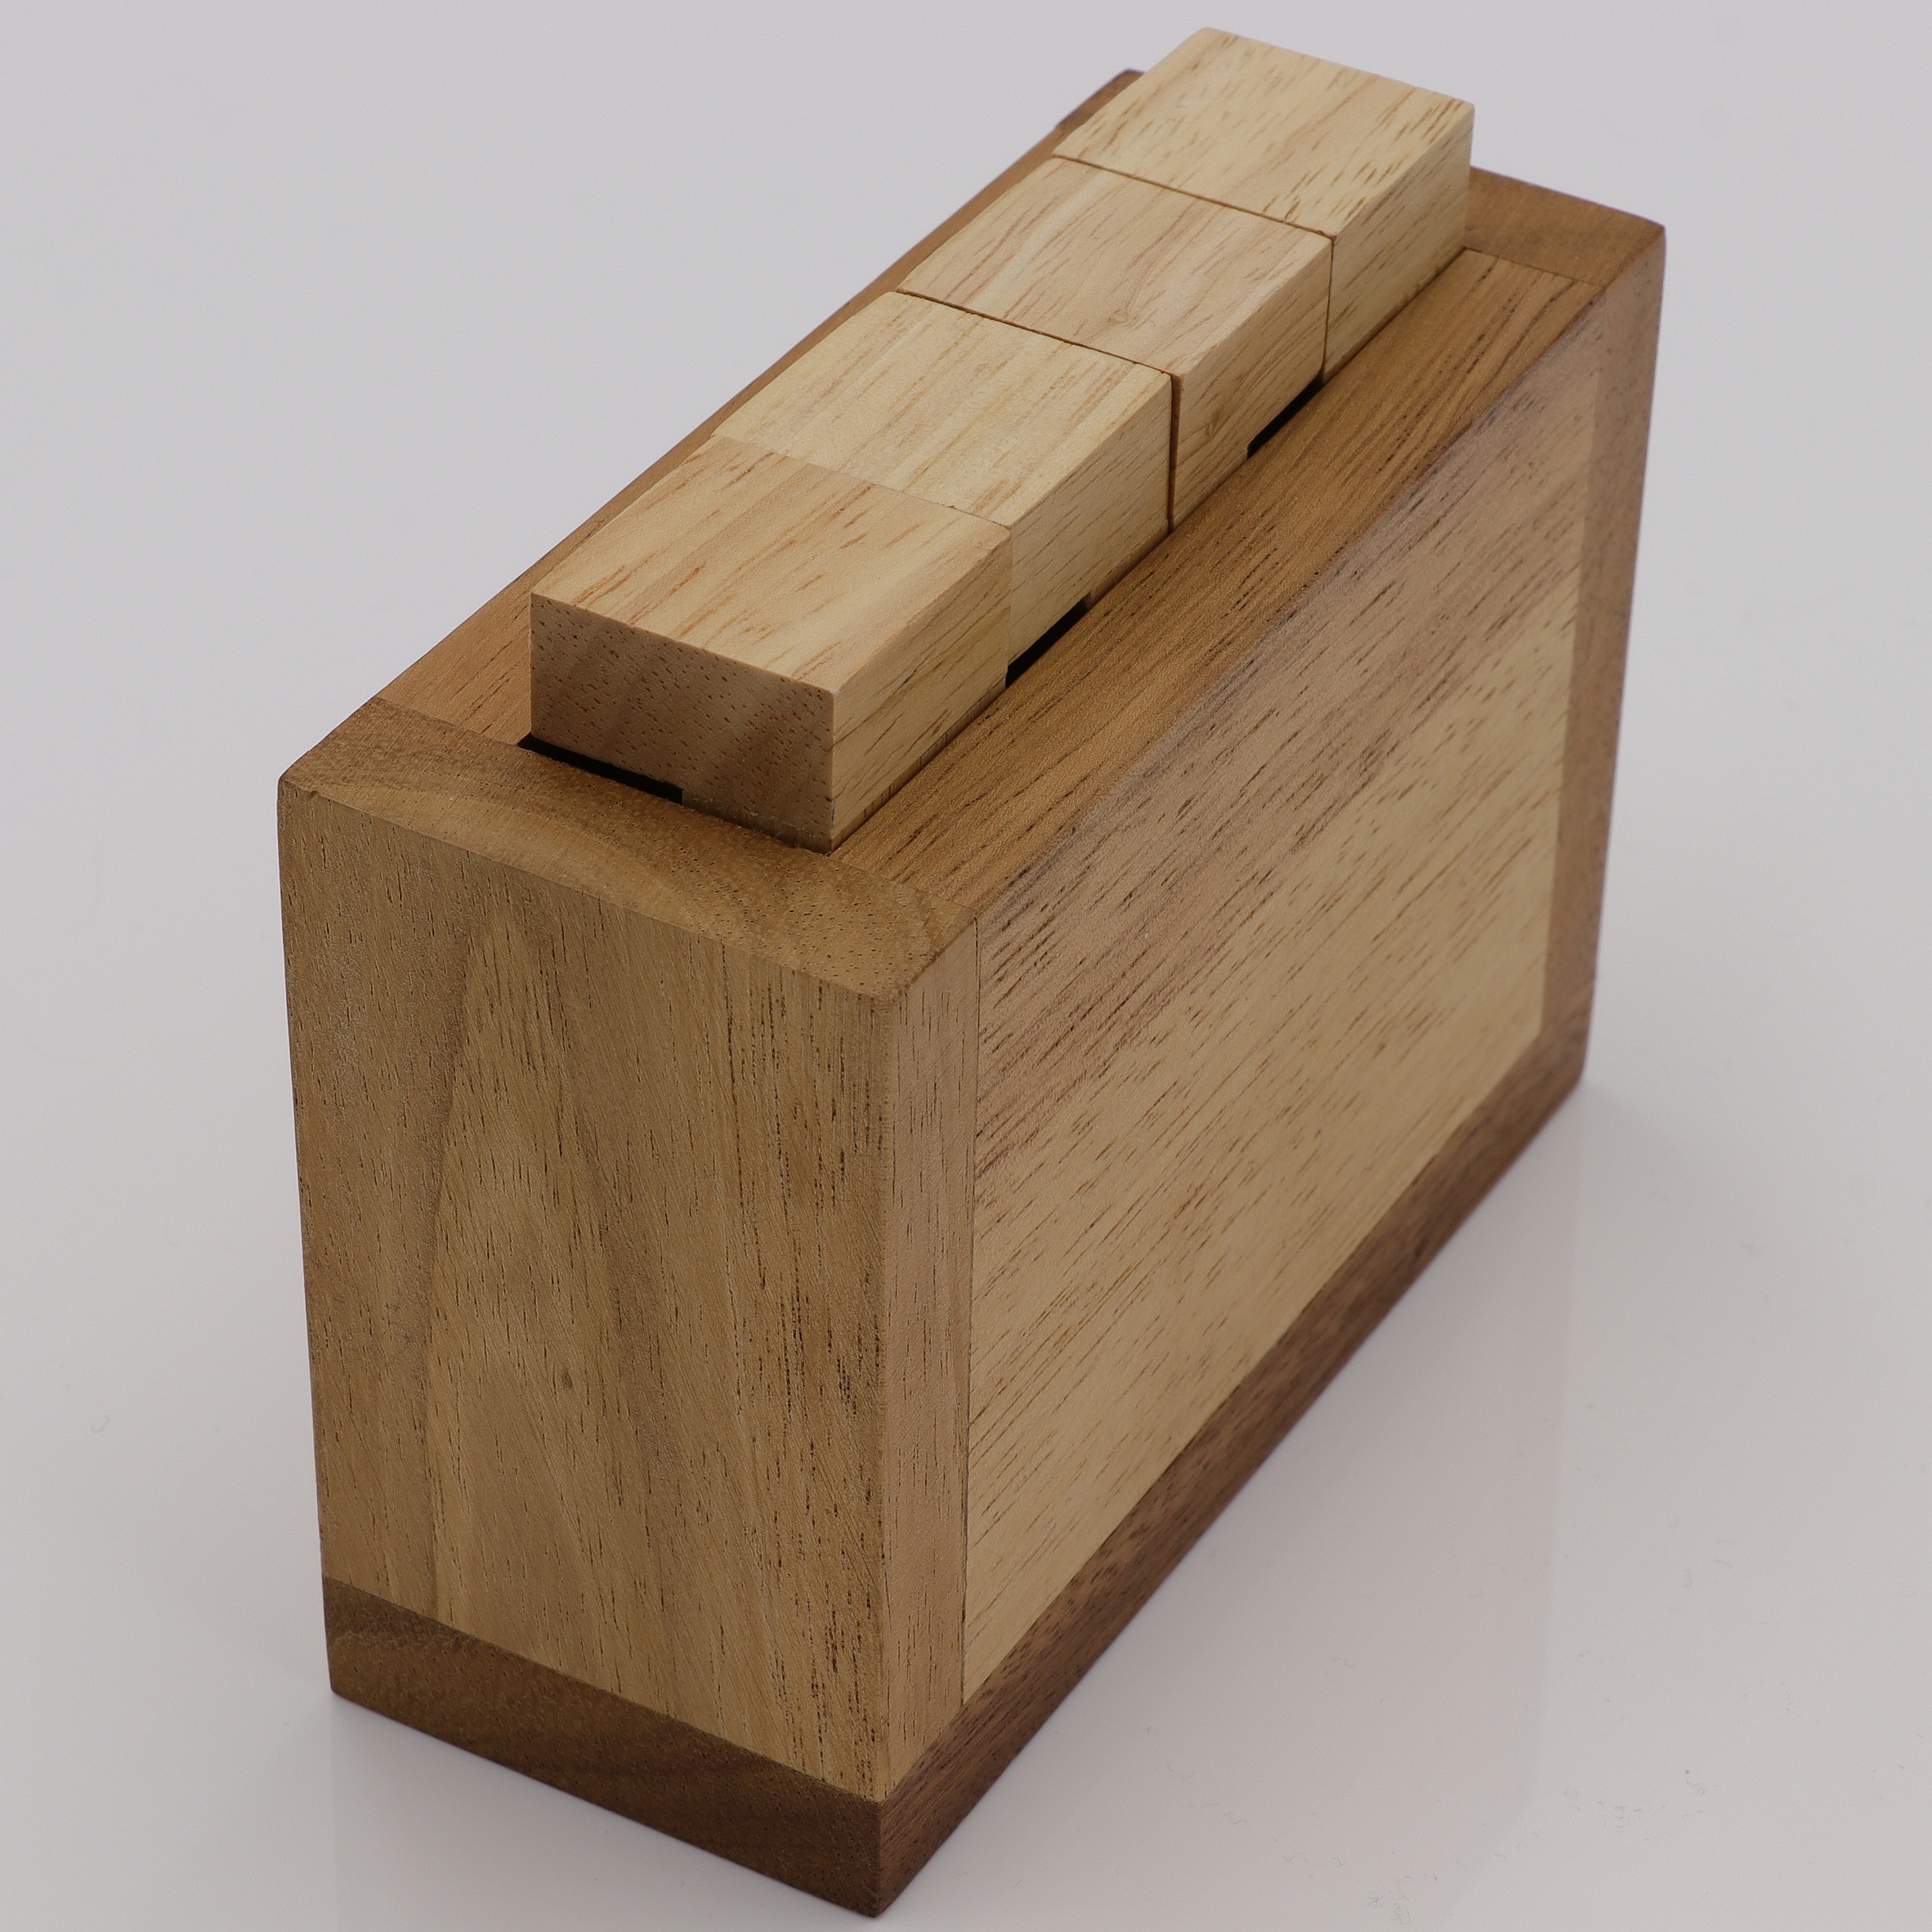 Sarcophagus - Geduldspiel aus Holz - 3D Puzzle - Sequential Disassembly Problem